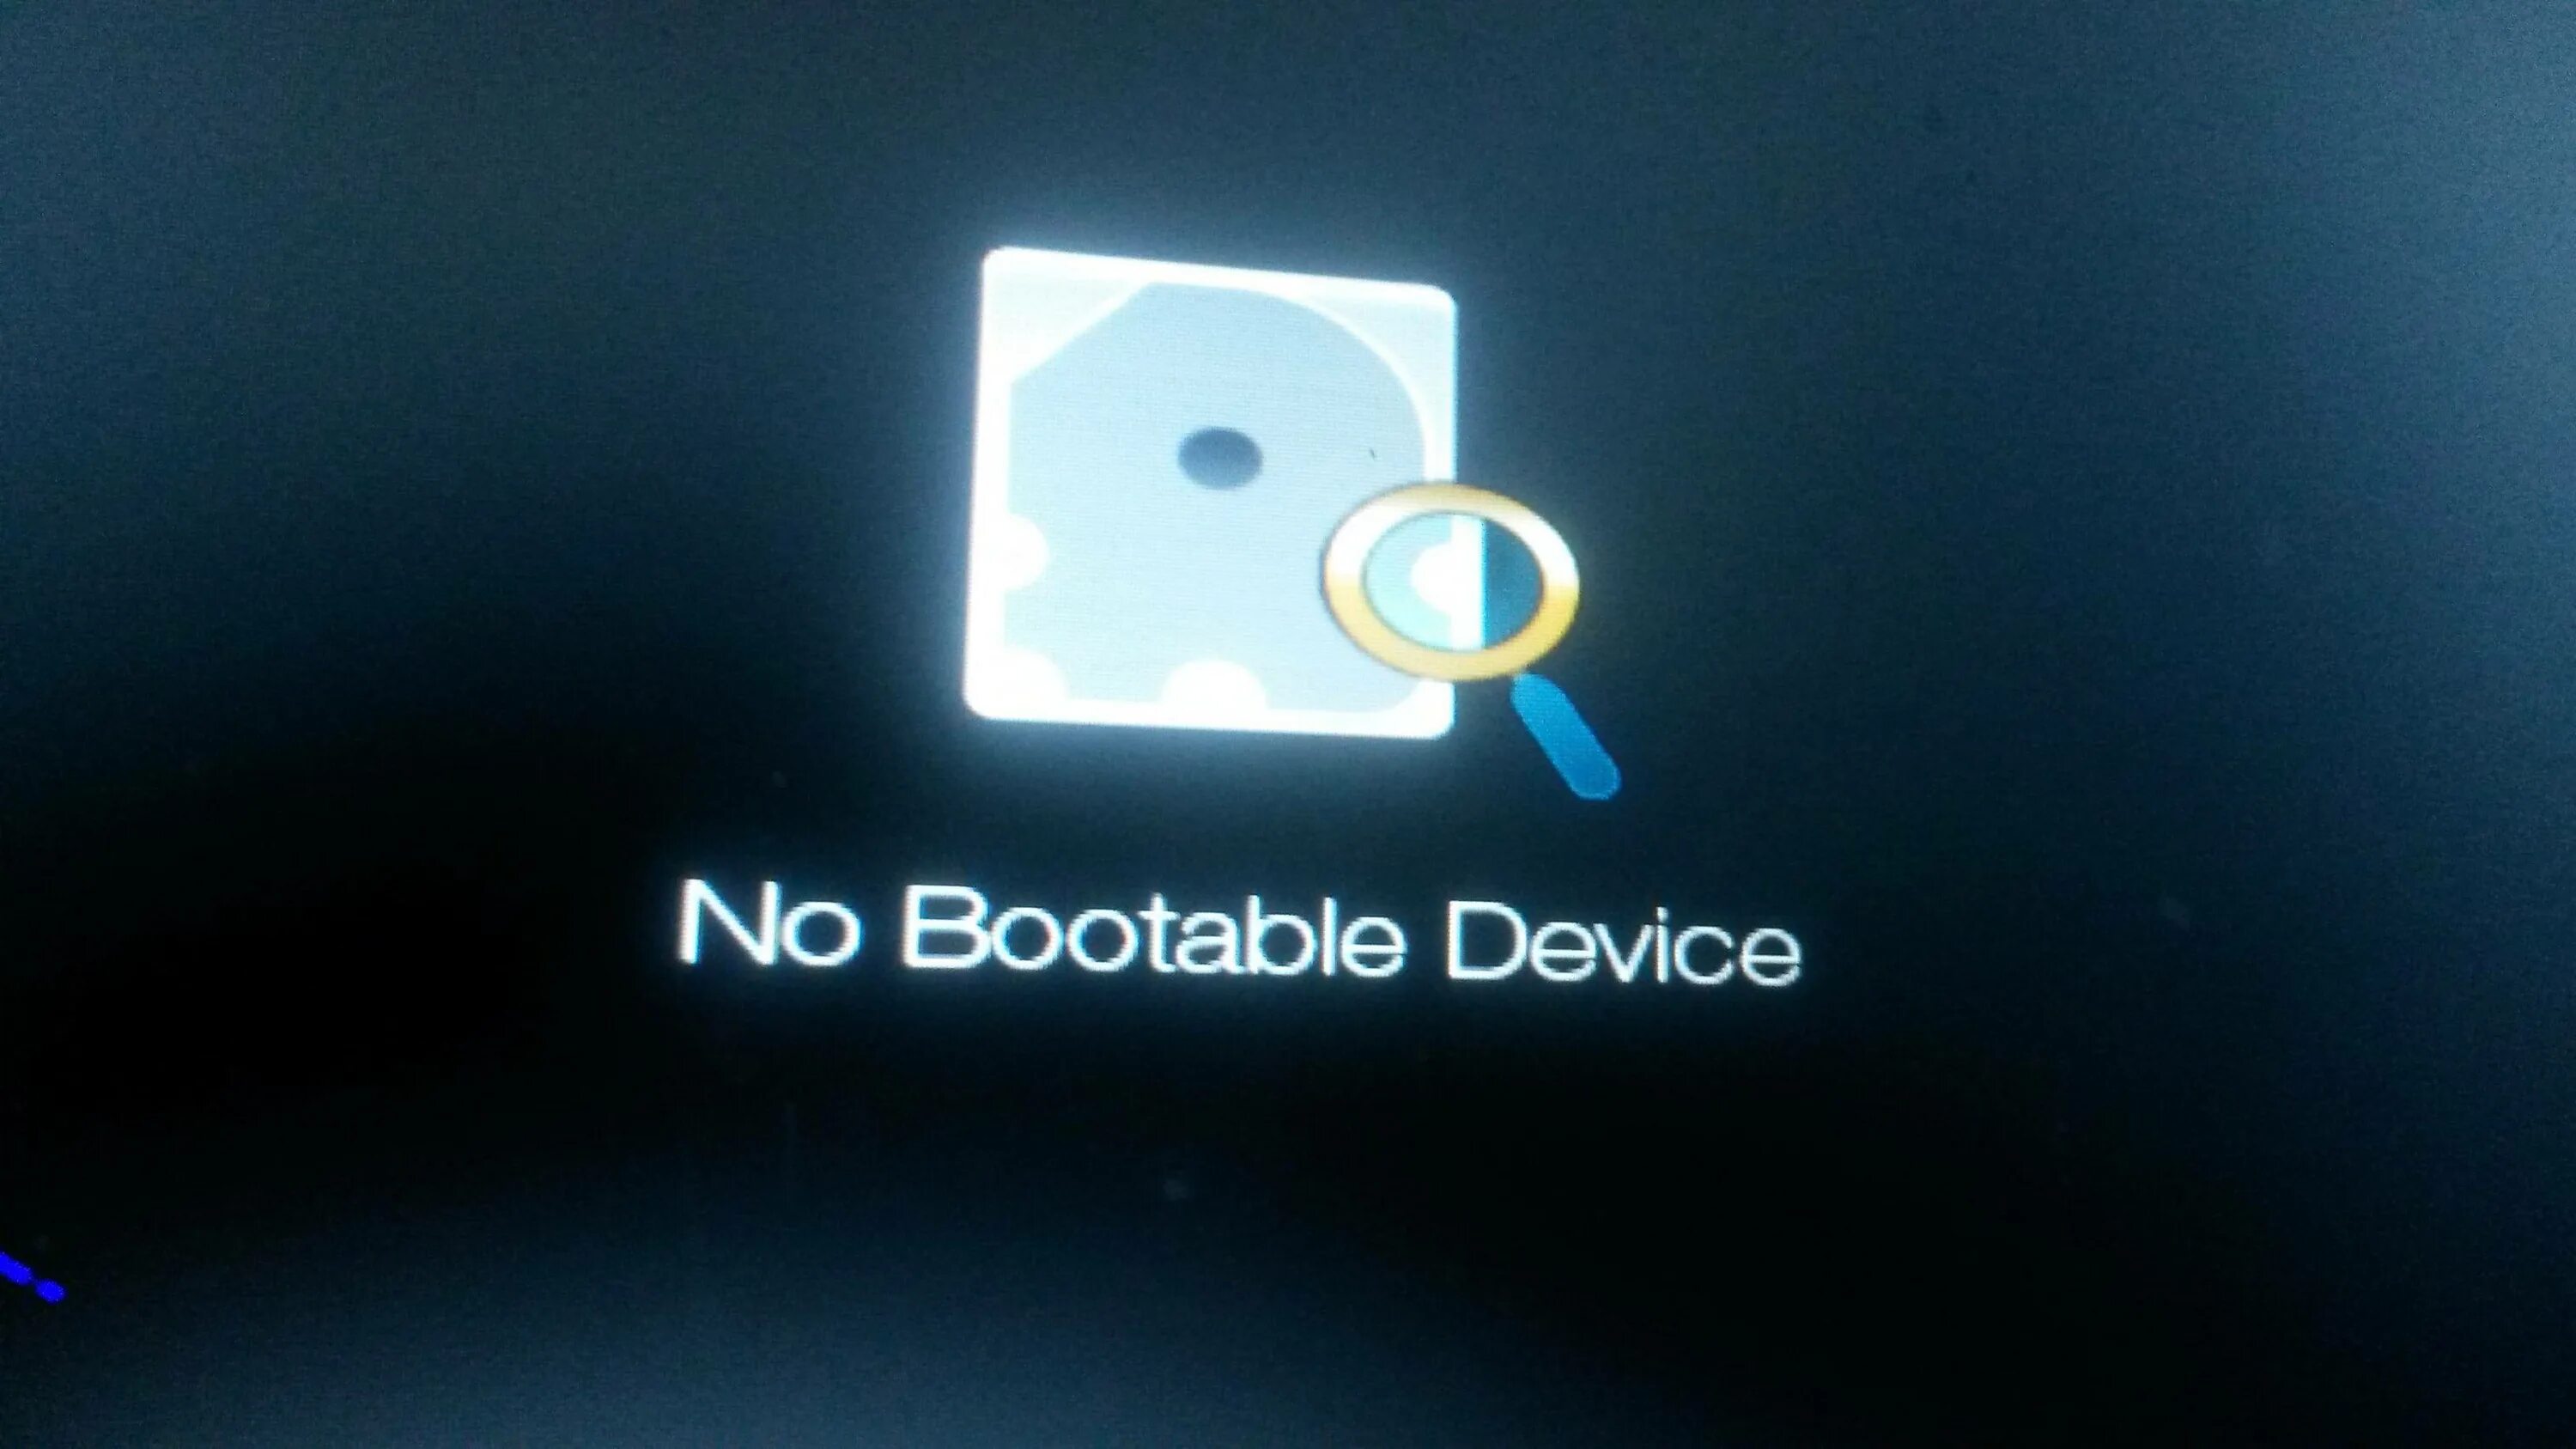 No bootable system. No Bootable device Acer. No Bootable device на ноутбуке. No Bootable device на ноутбуке Acer. No Bootable device на ноутбуке Acer Windows 10.